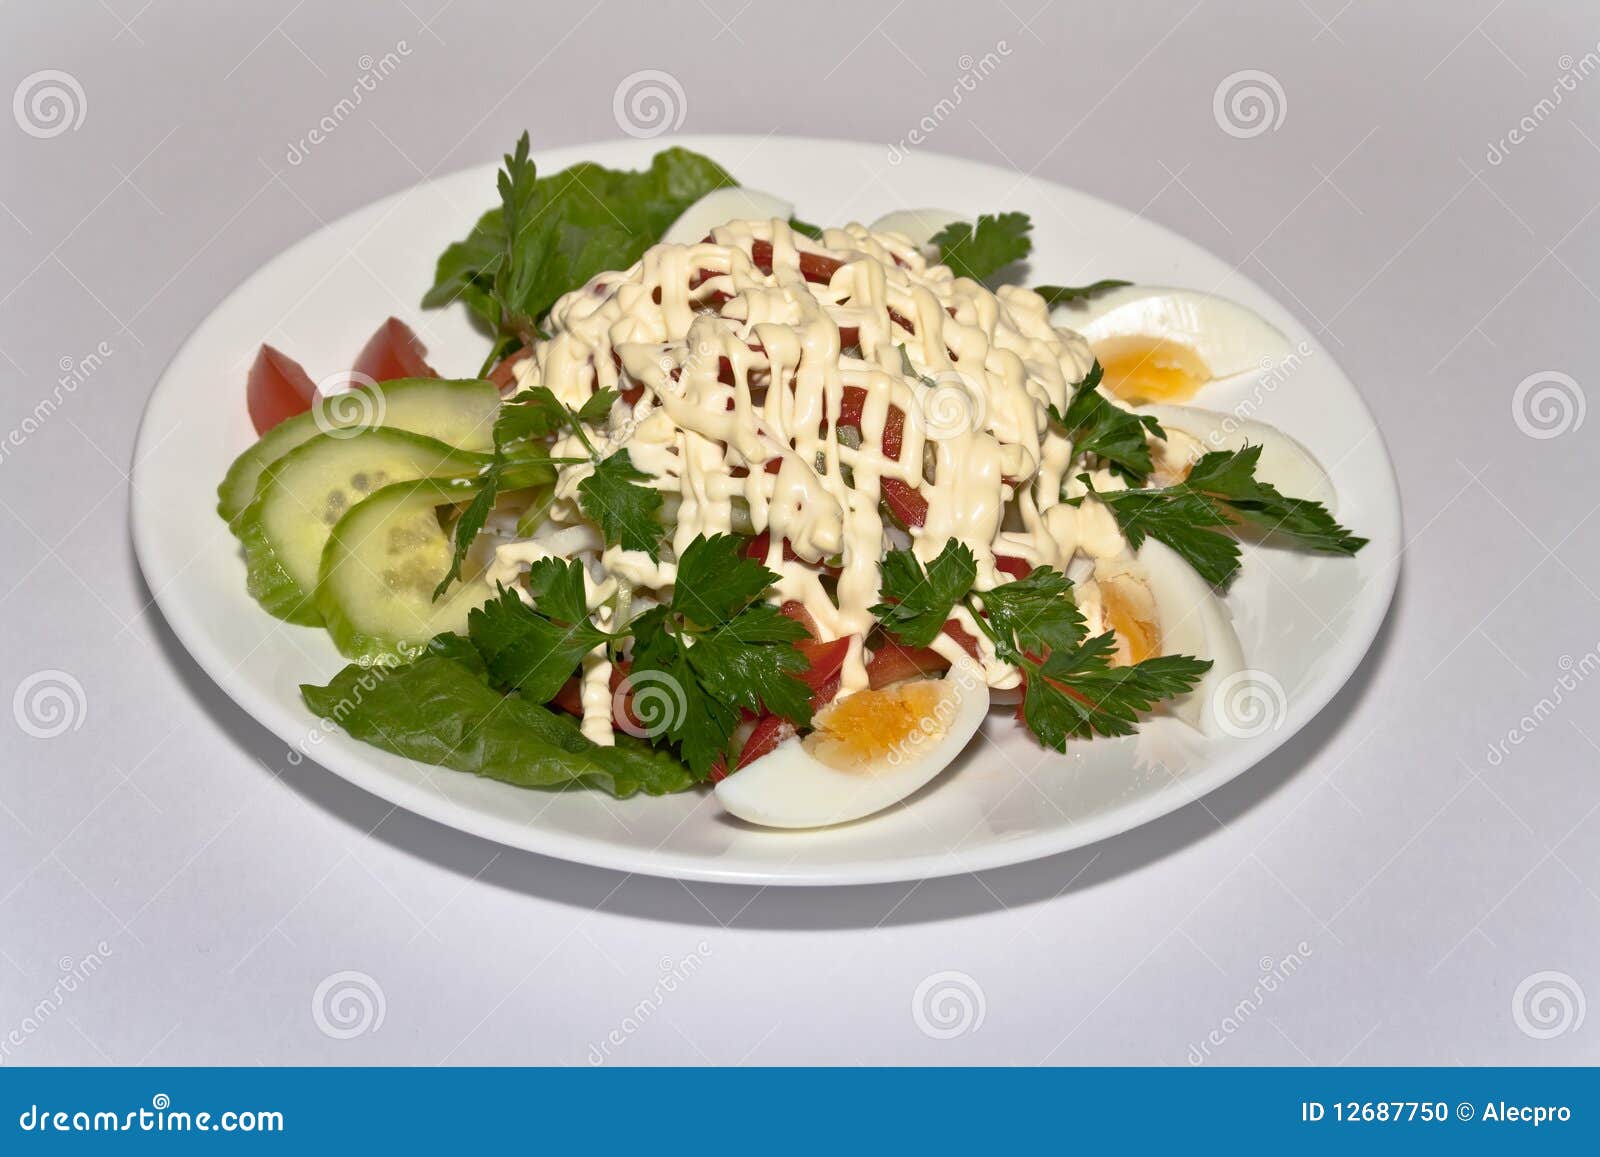 salad green